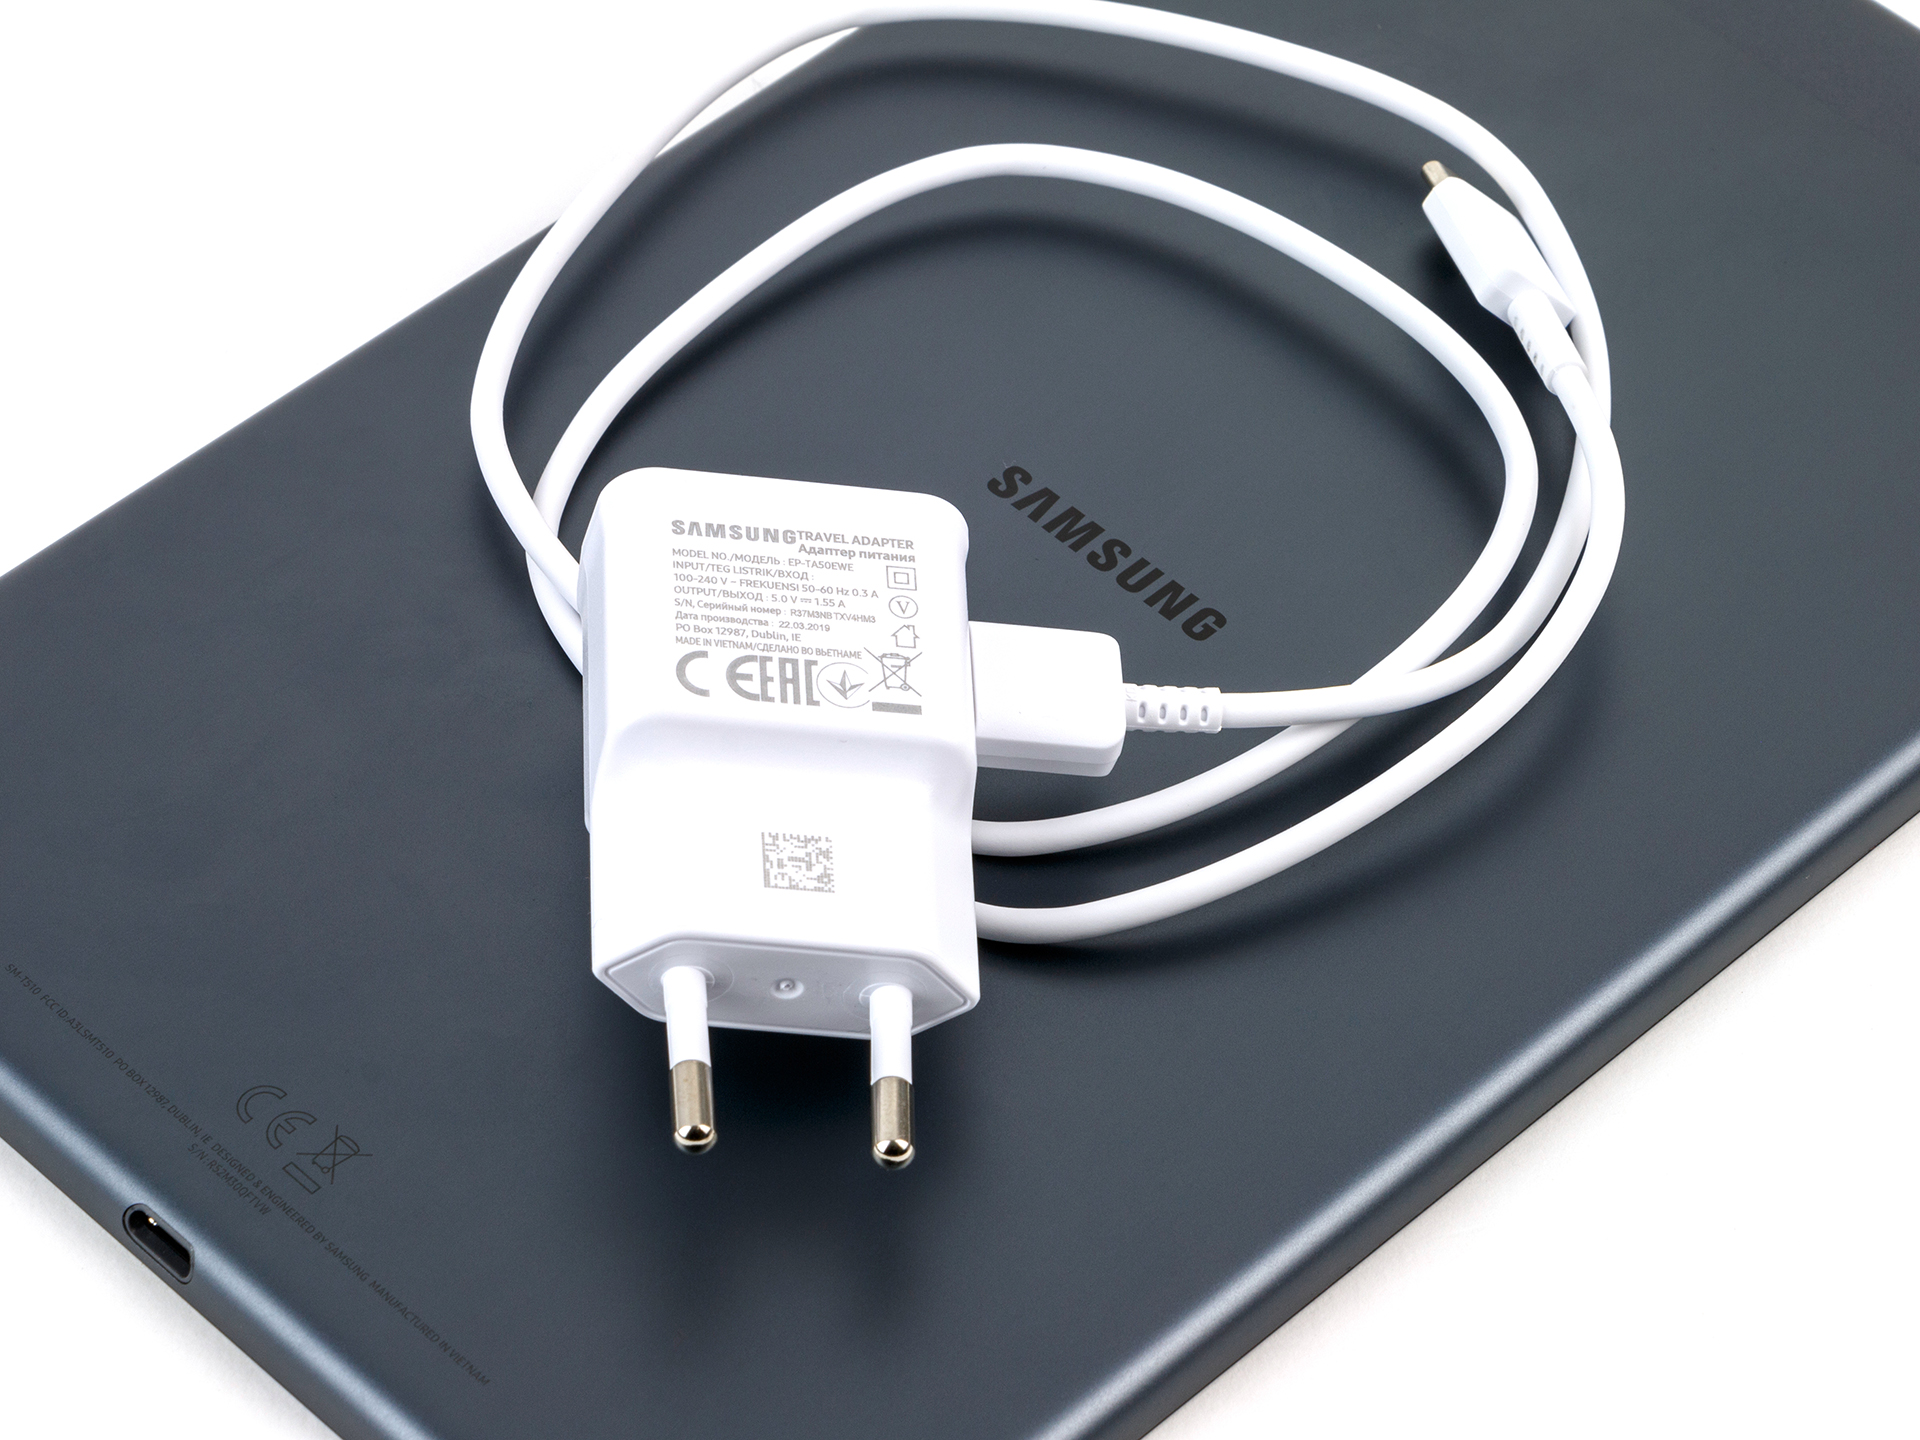 Critique Complete De La Tablette Samsung Galaxy Tab A 10 1 19 Notebookcheck Fr